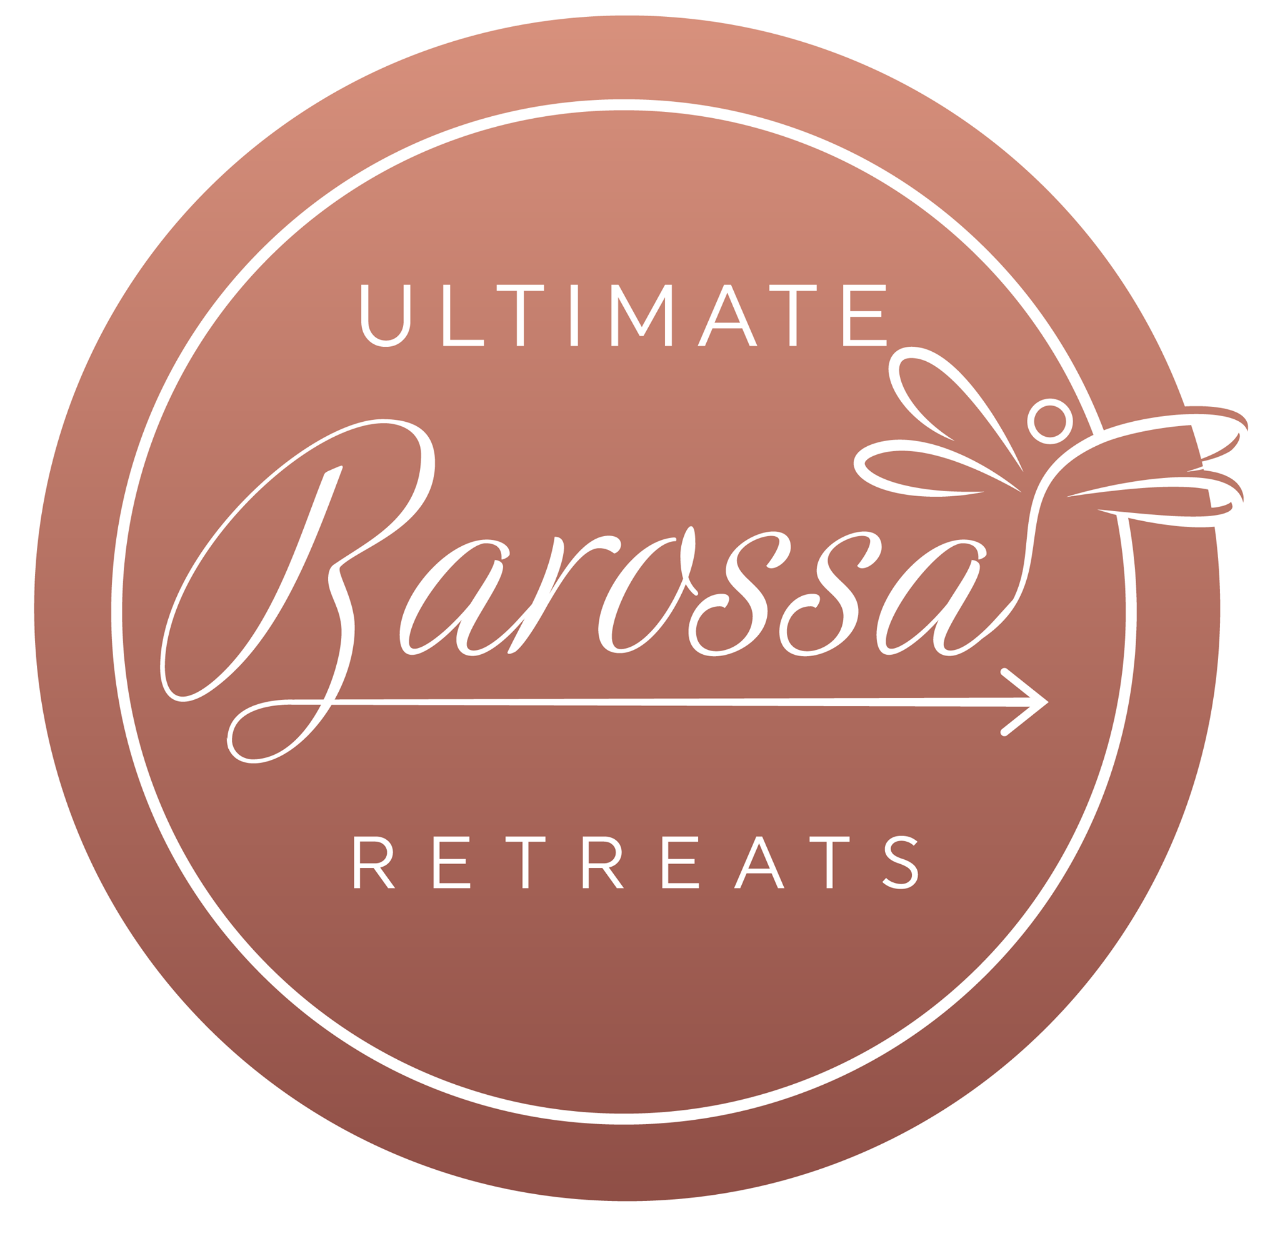 Ultimate Barossa Retreats February 2022